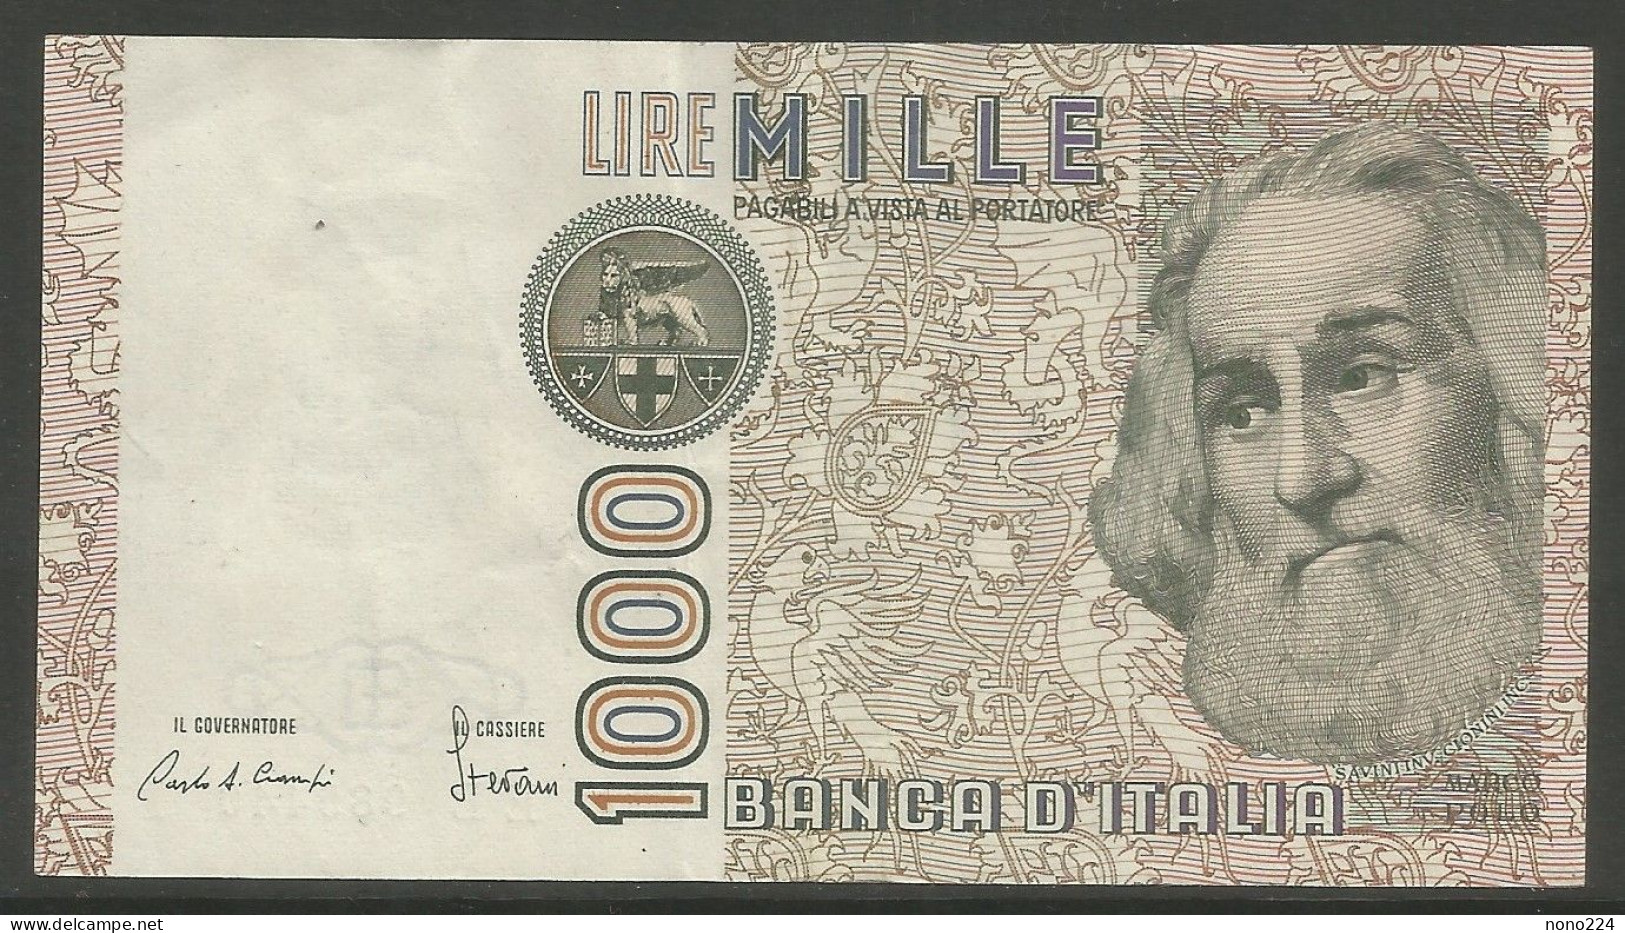 Billet De 1982 ( Italie 1000 Lire ) - 1.000 Lire